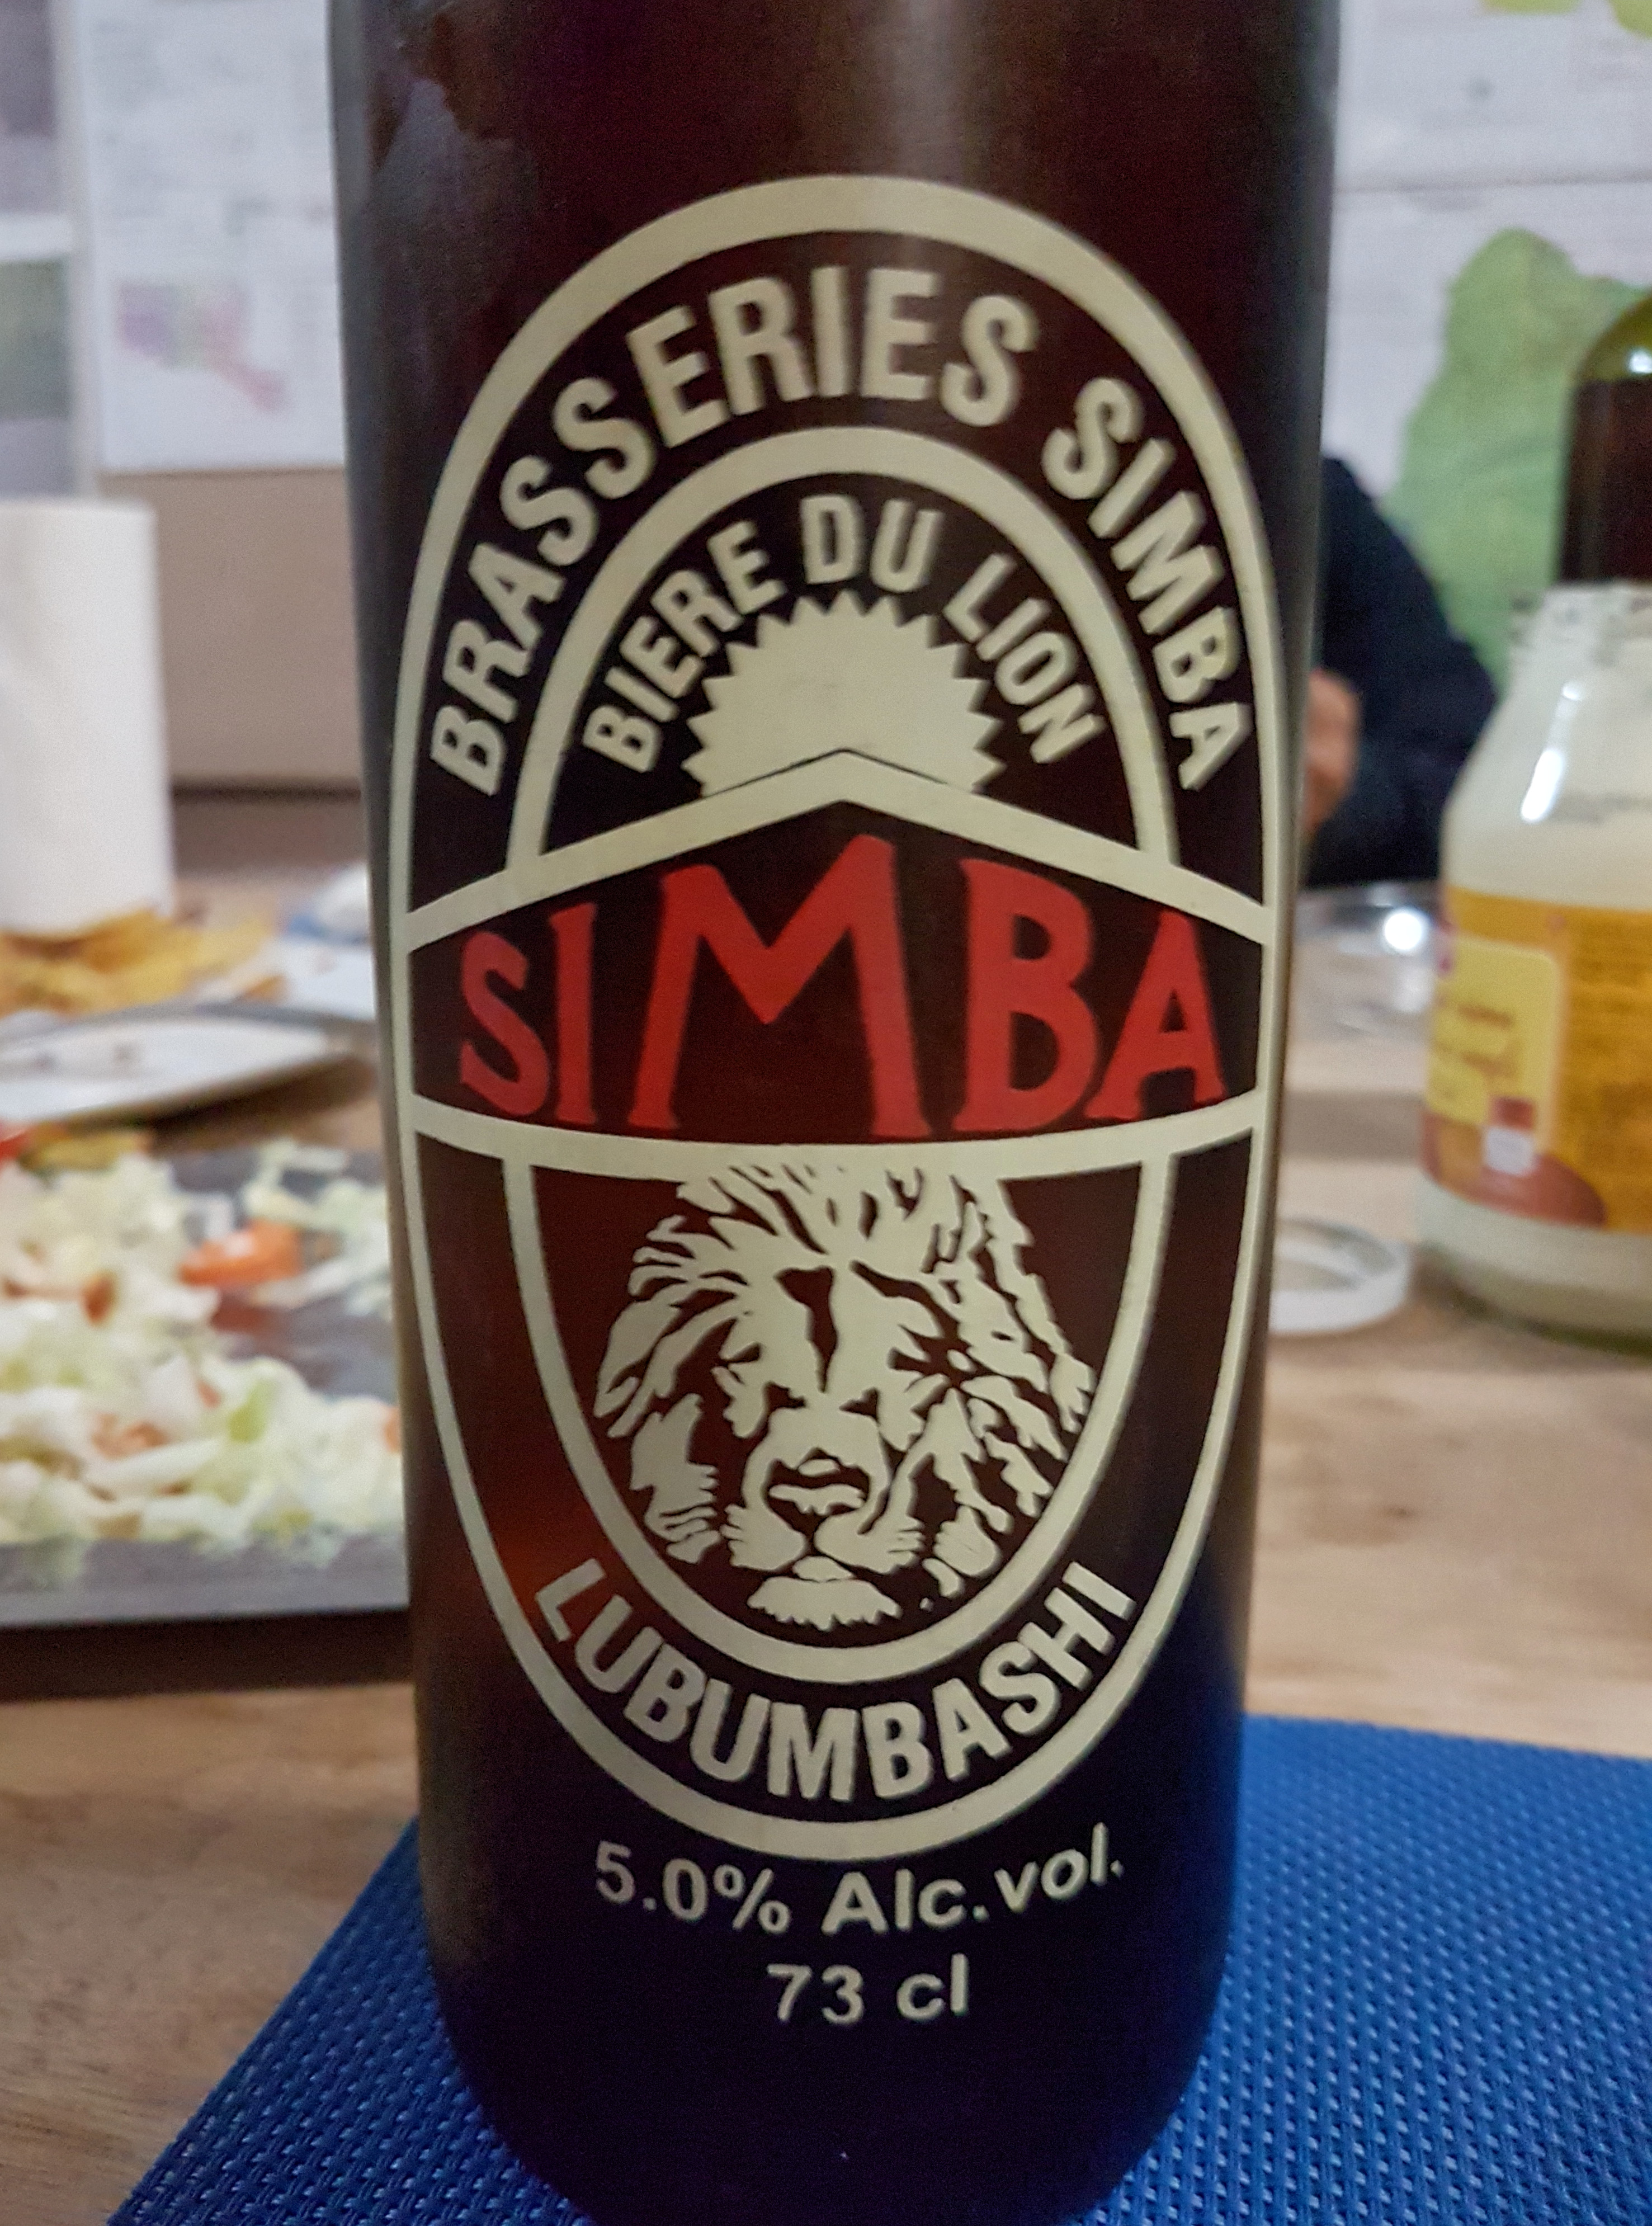 La fameuse bière Simba (lion en swahili), brassée à Lubumbashi